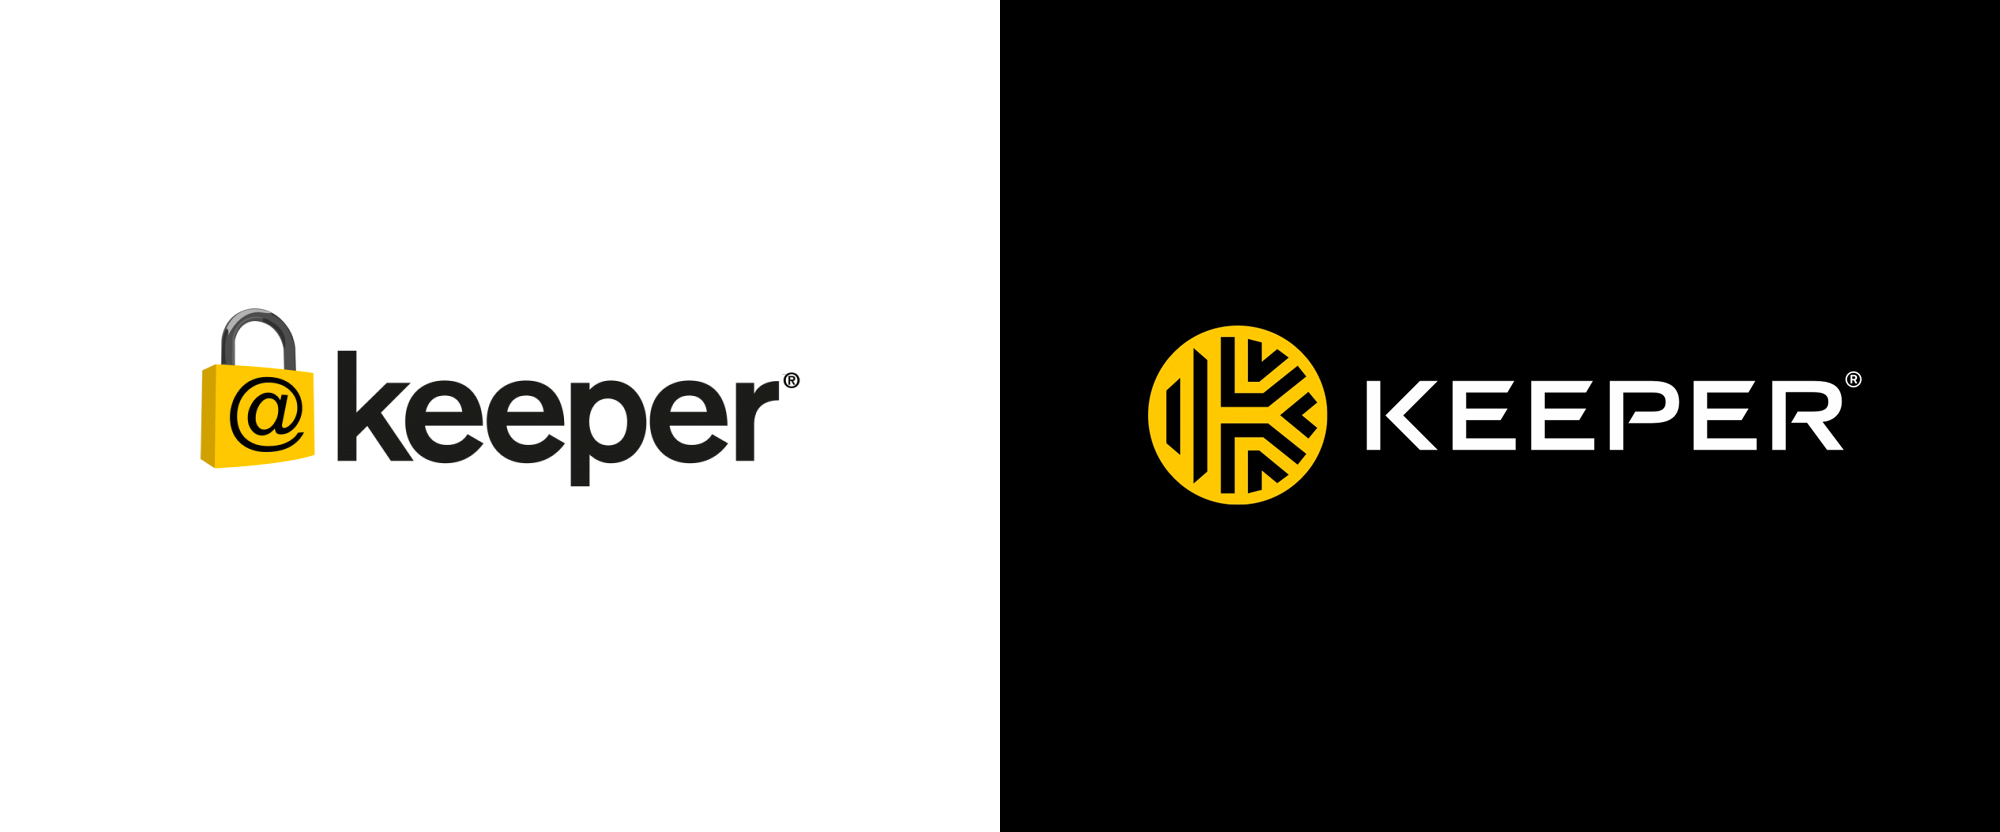 Keeper Logo - Brand New: New Logo for Keeper